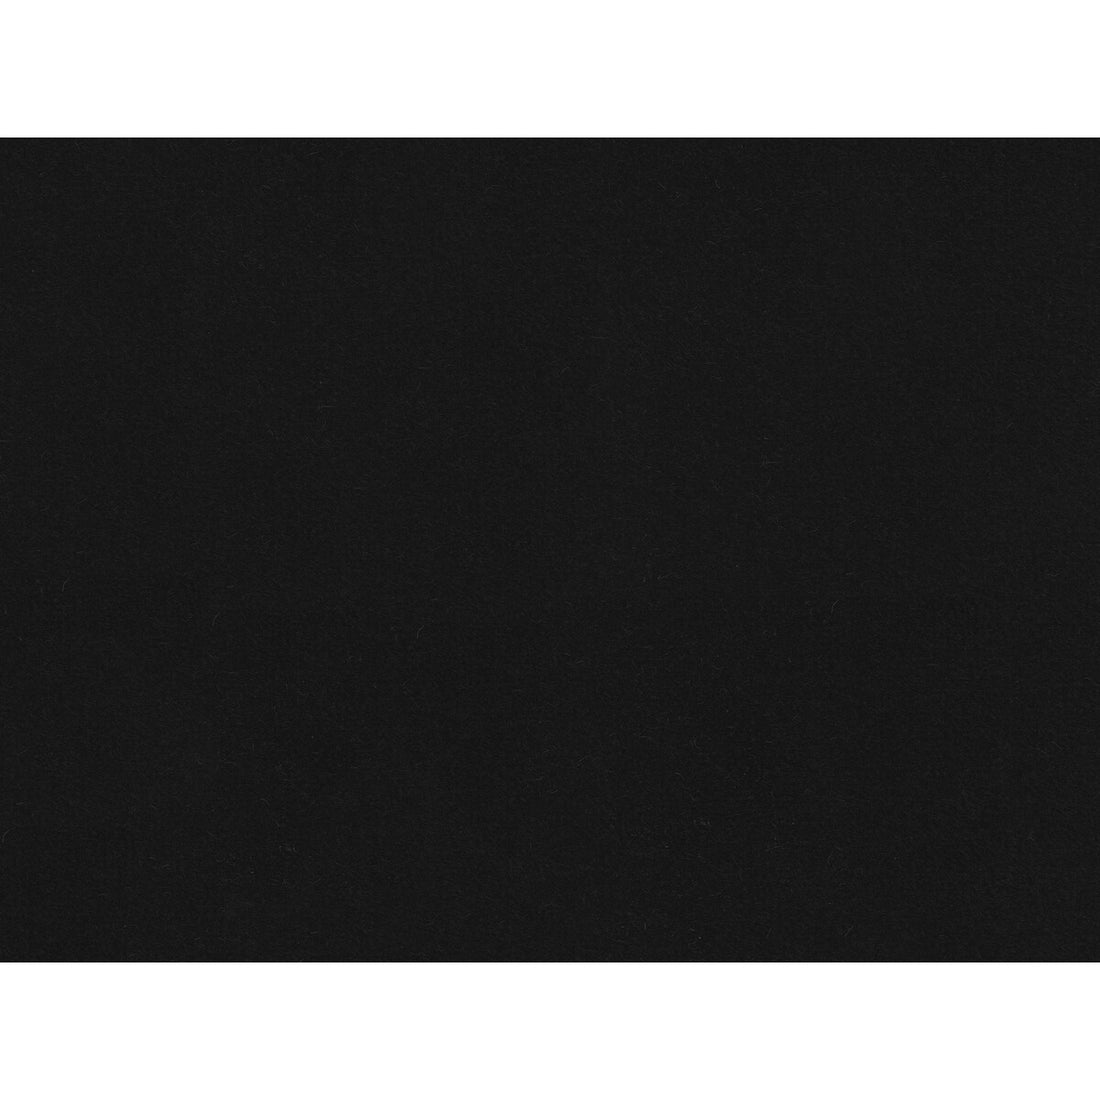 Oxford Velvet fabric in noir color - pattern 2016122.8.0 - by Lee Jofa